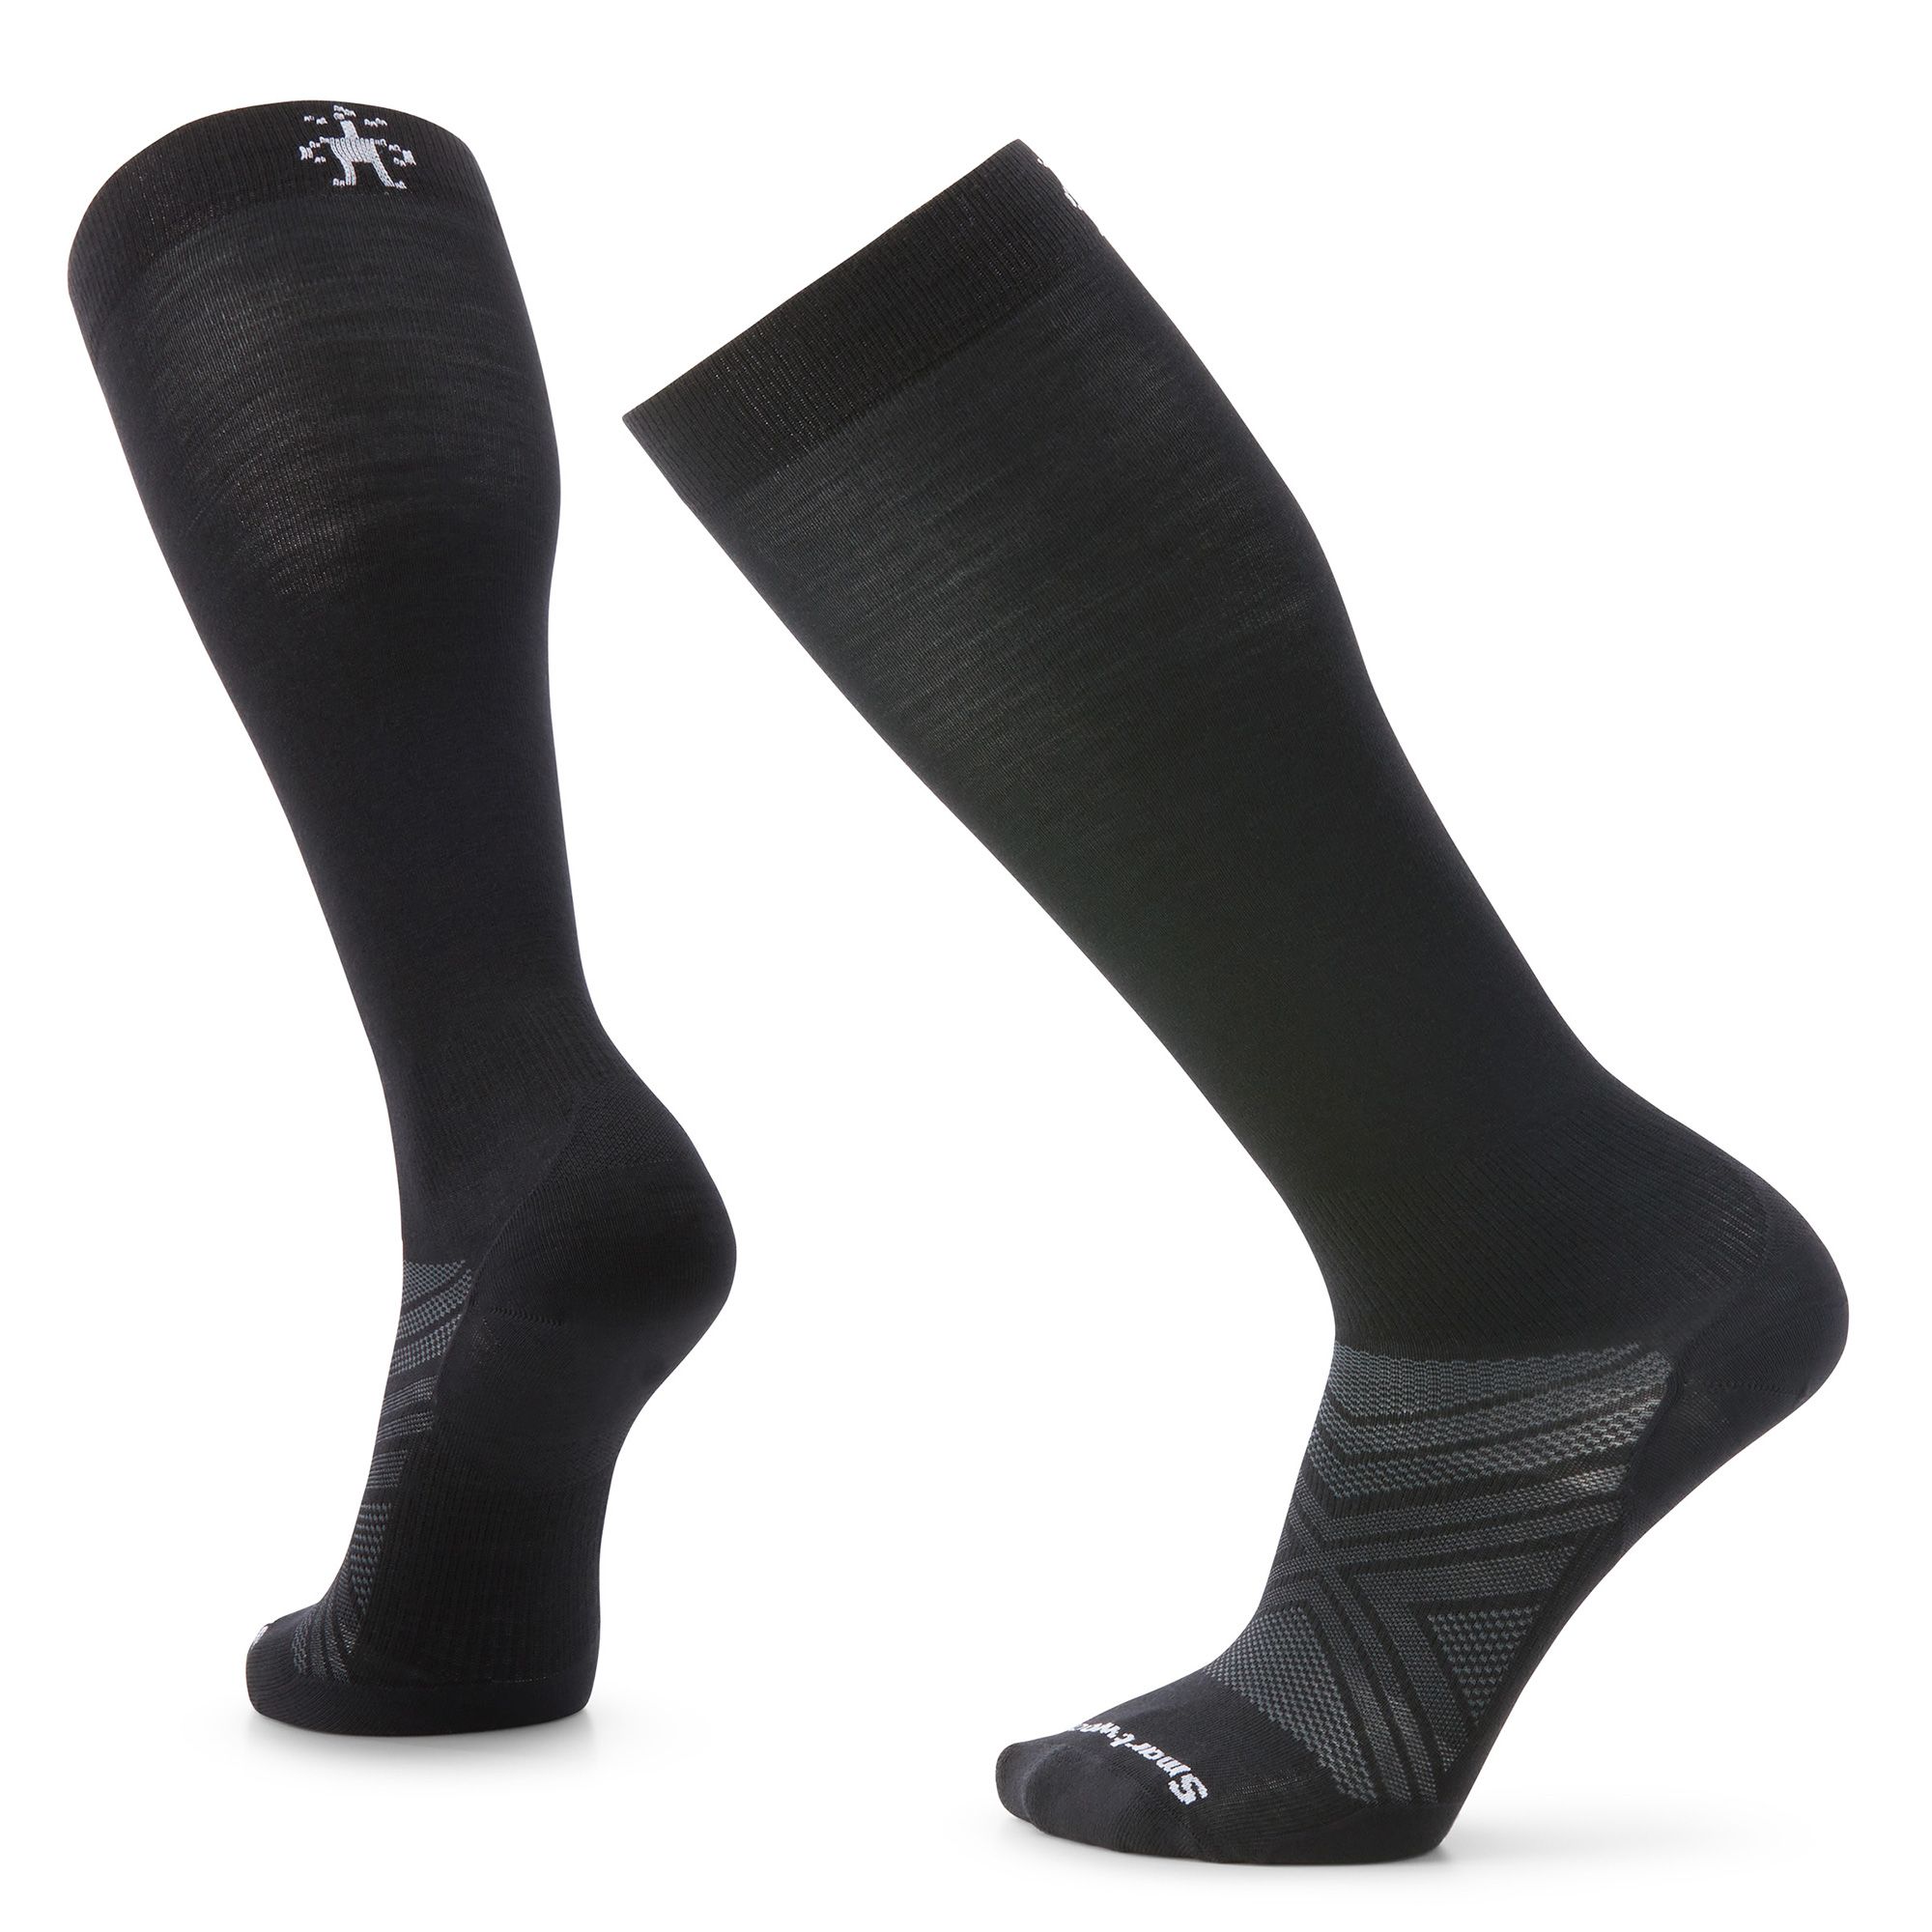 Orthofit Inflight Socks Black  Shop Today. Get it Tomorrow